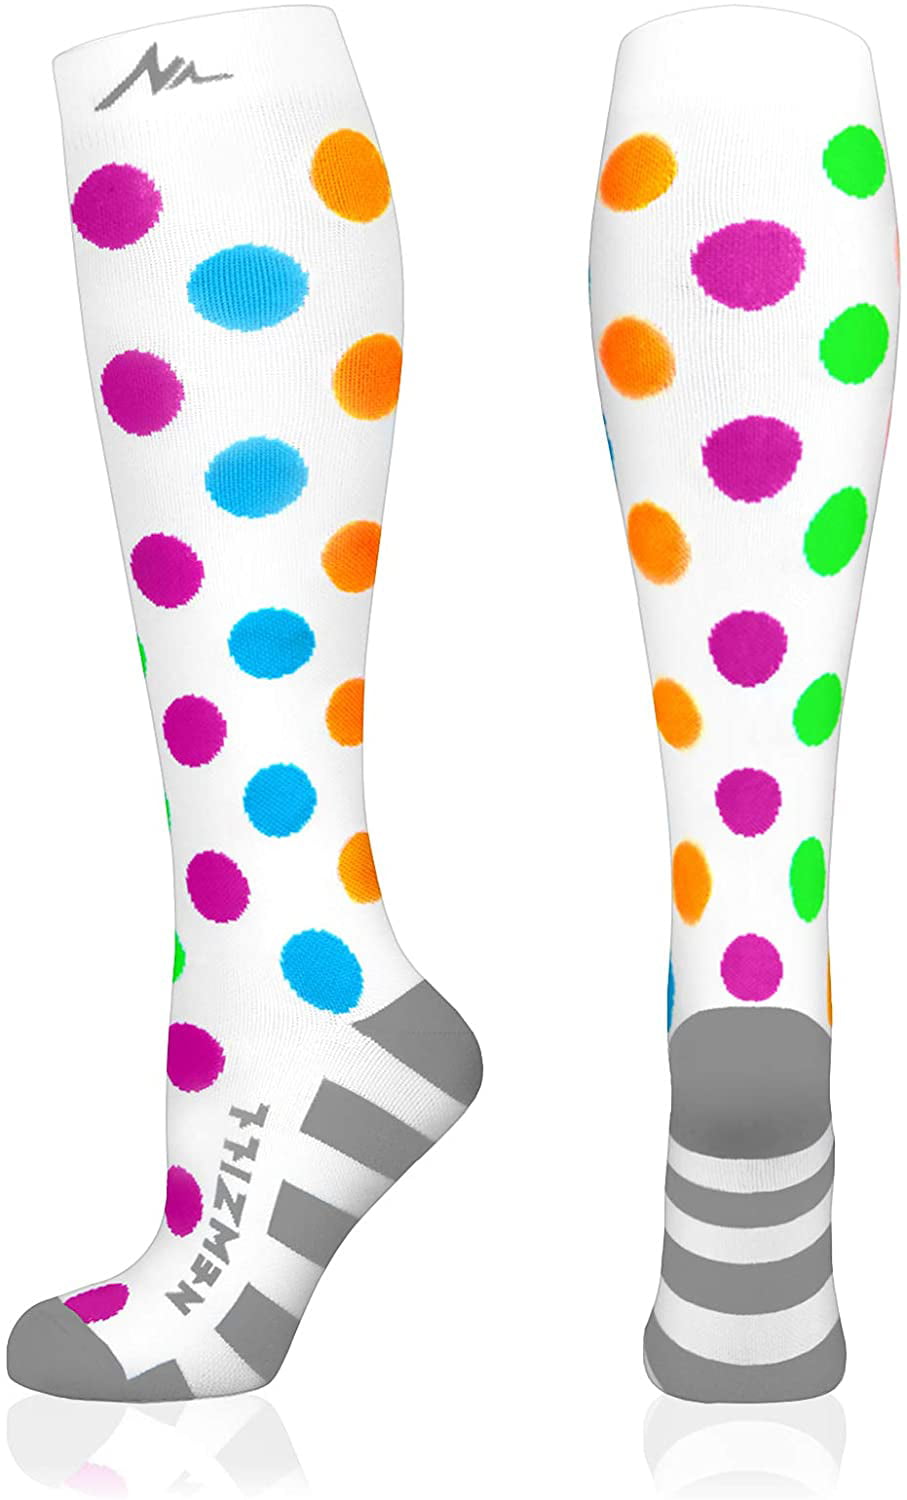 Compression Socks for Women and Men Circulation 3 Pairs Best for Medical,Nursing,Running,Travel Knee High Socks 